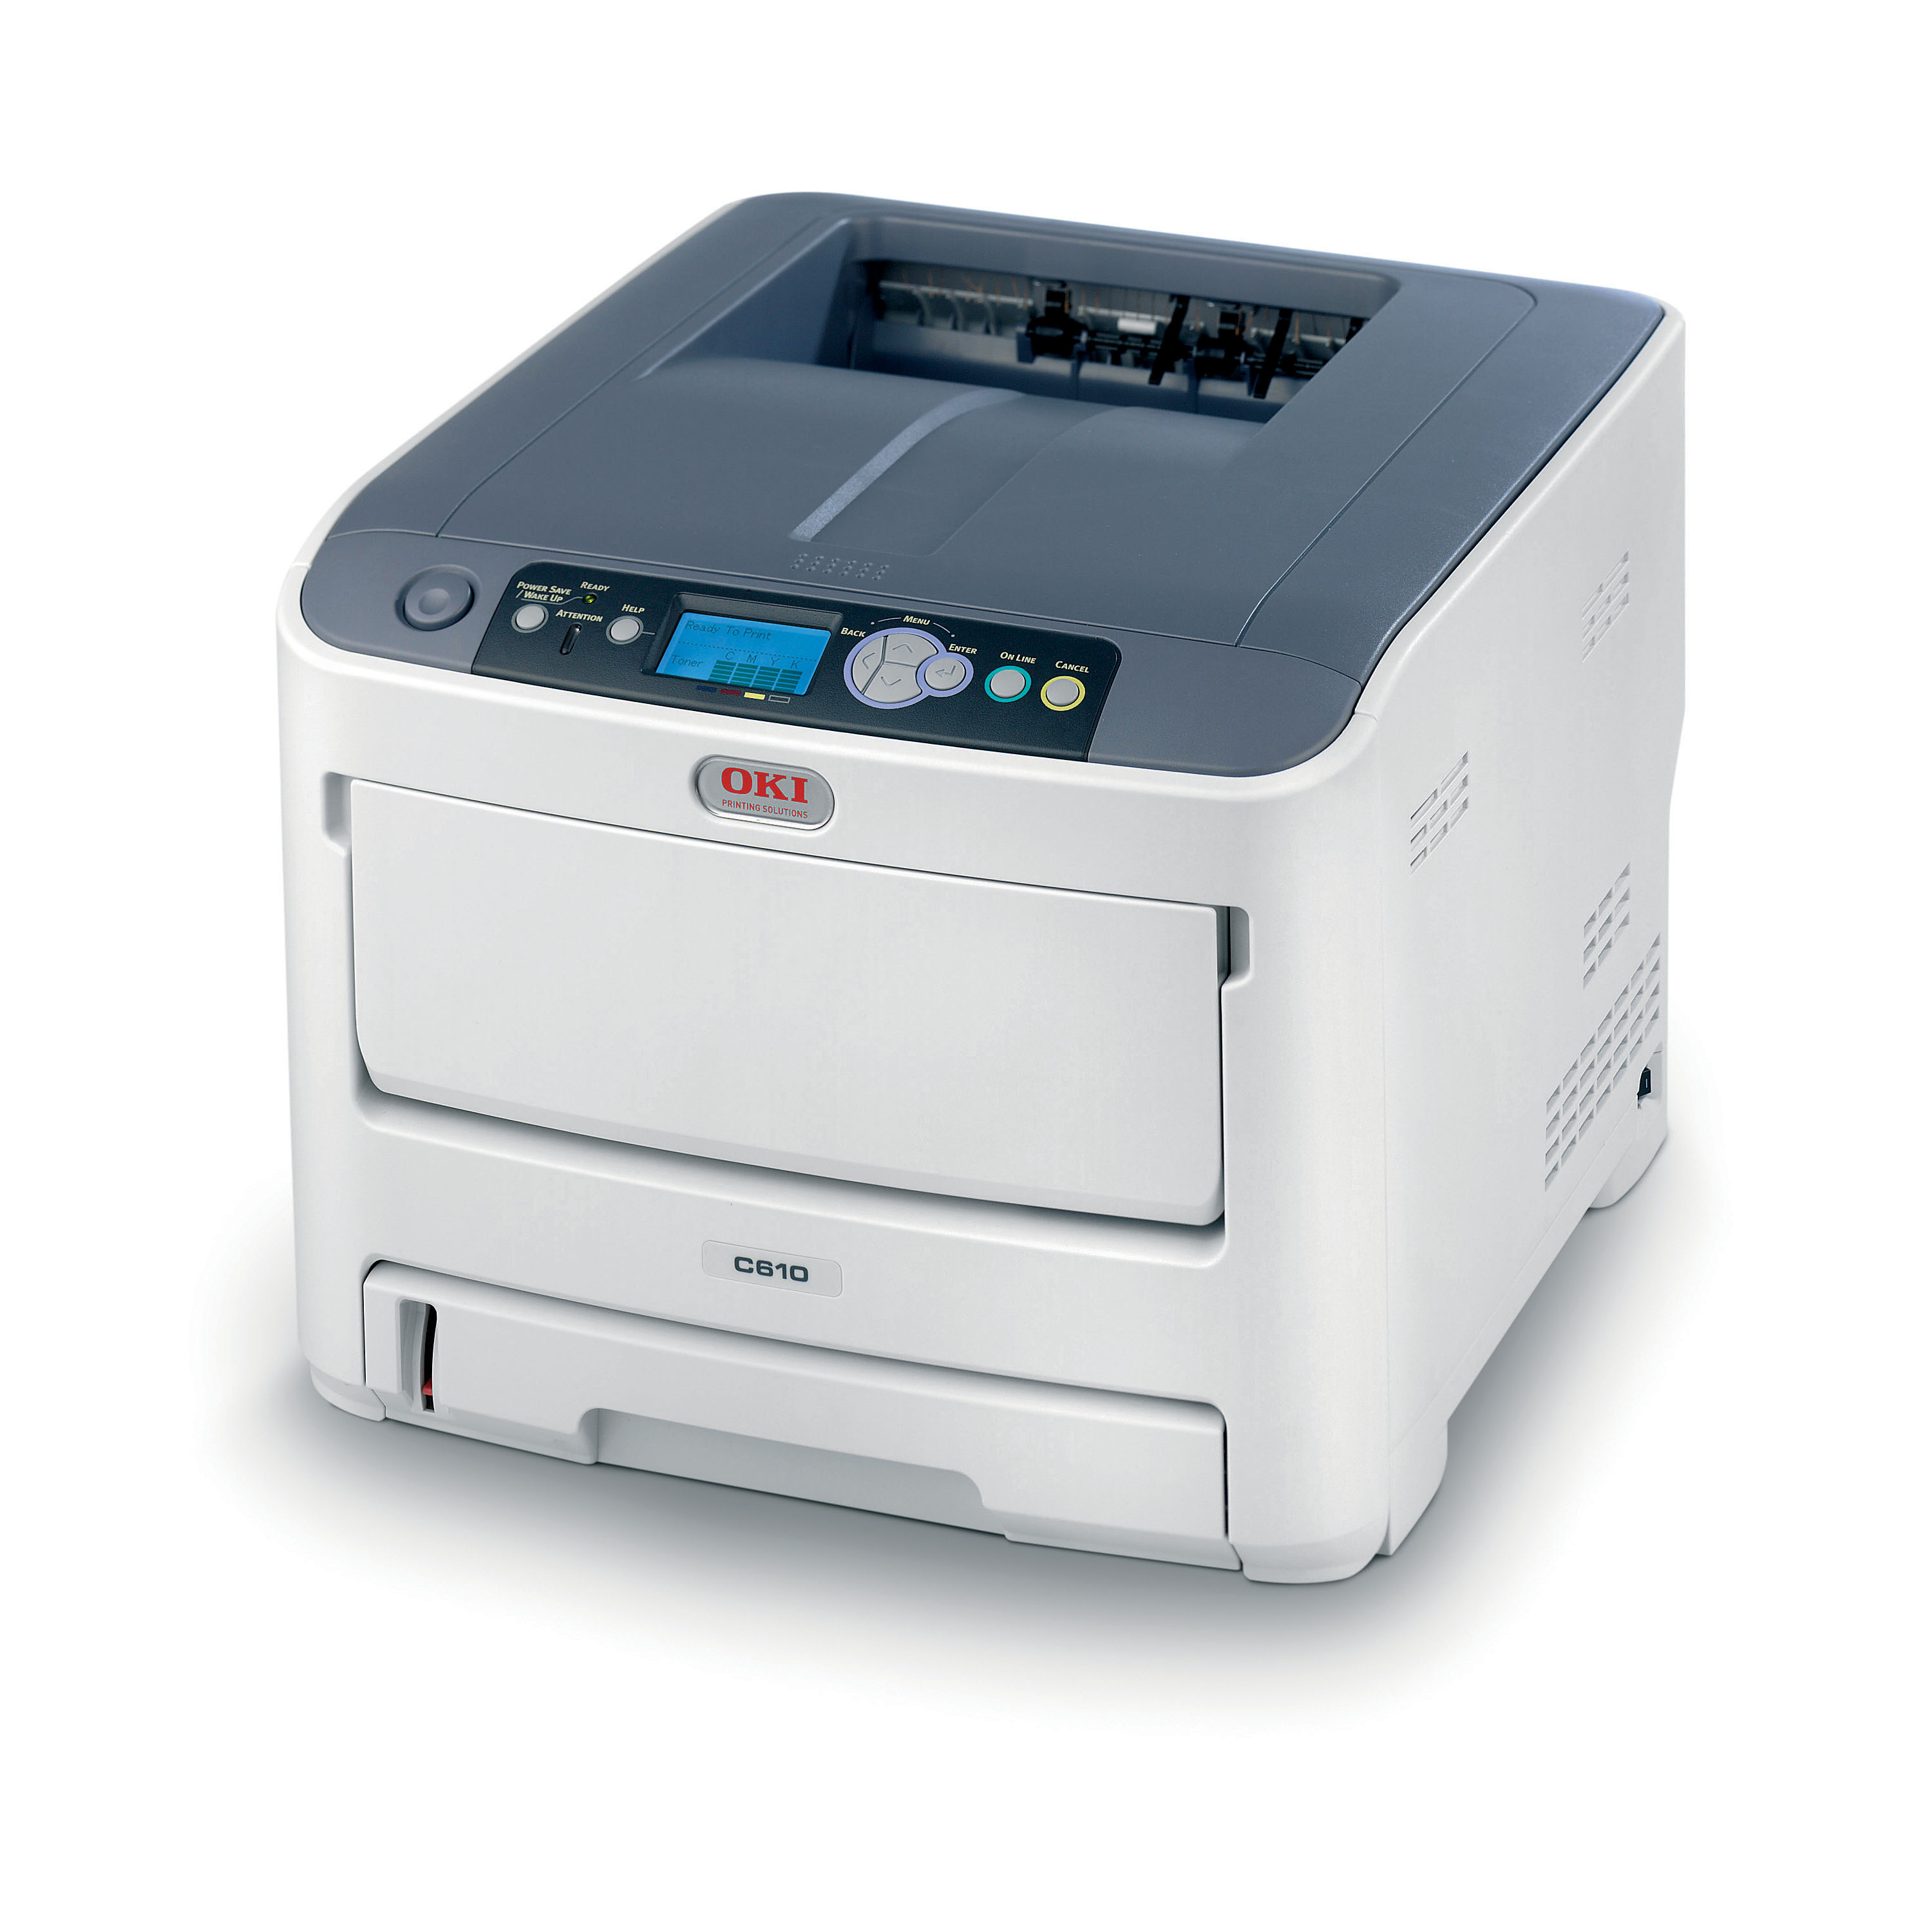 01269501 OKI C610N Printer - Refurbished